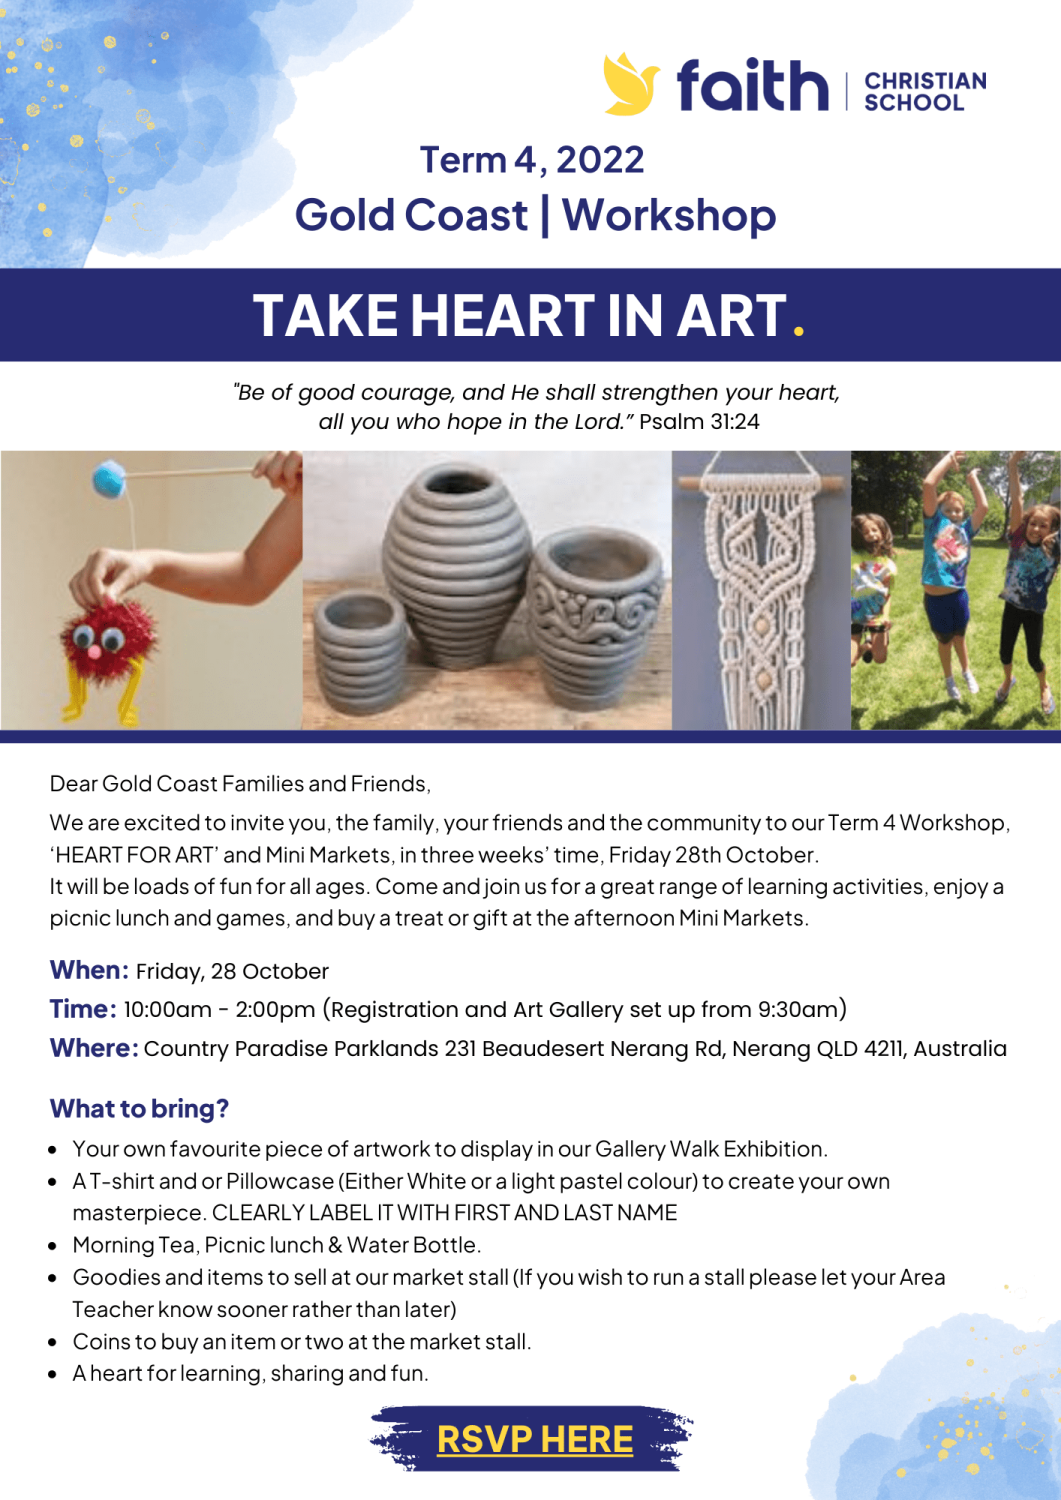 Gold Coast Workshop Take Heart in Art